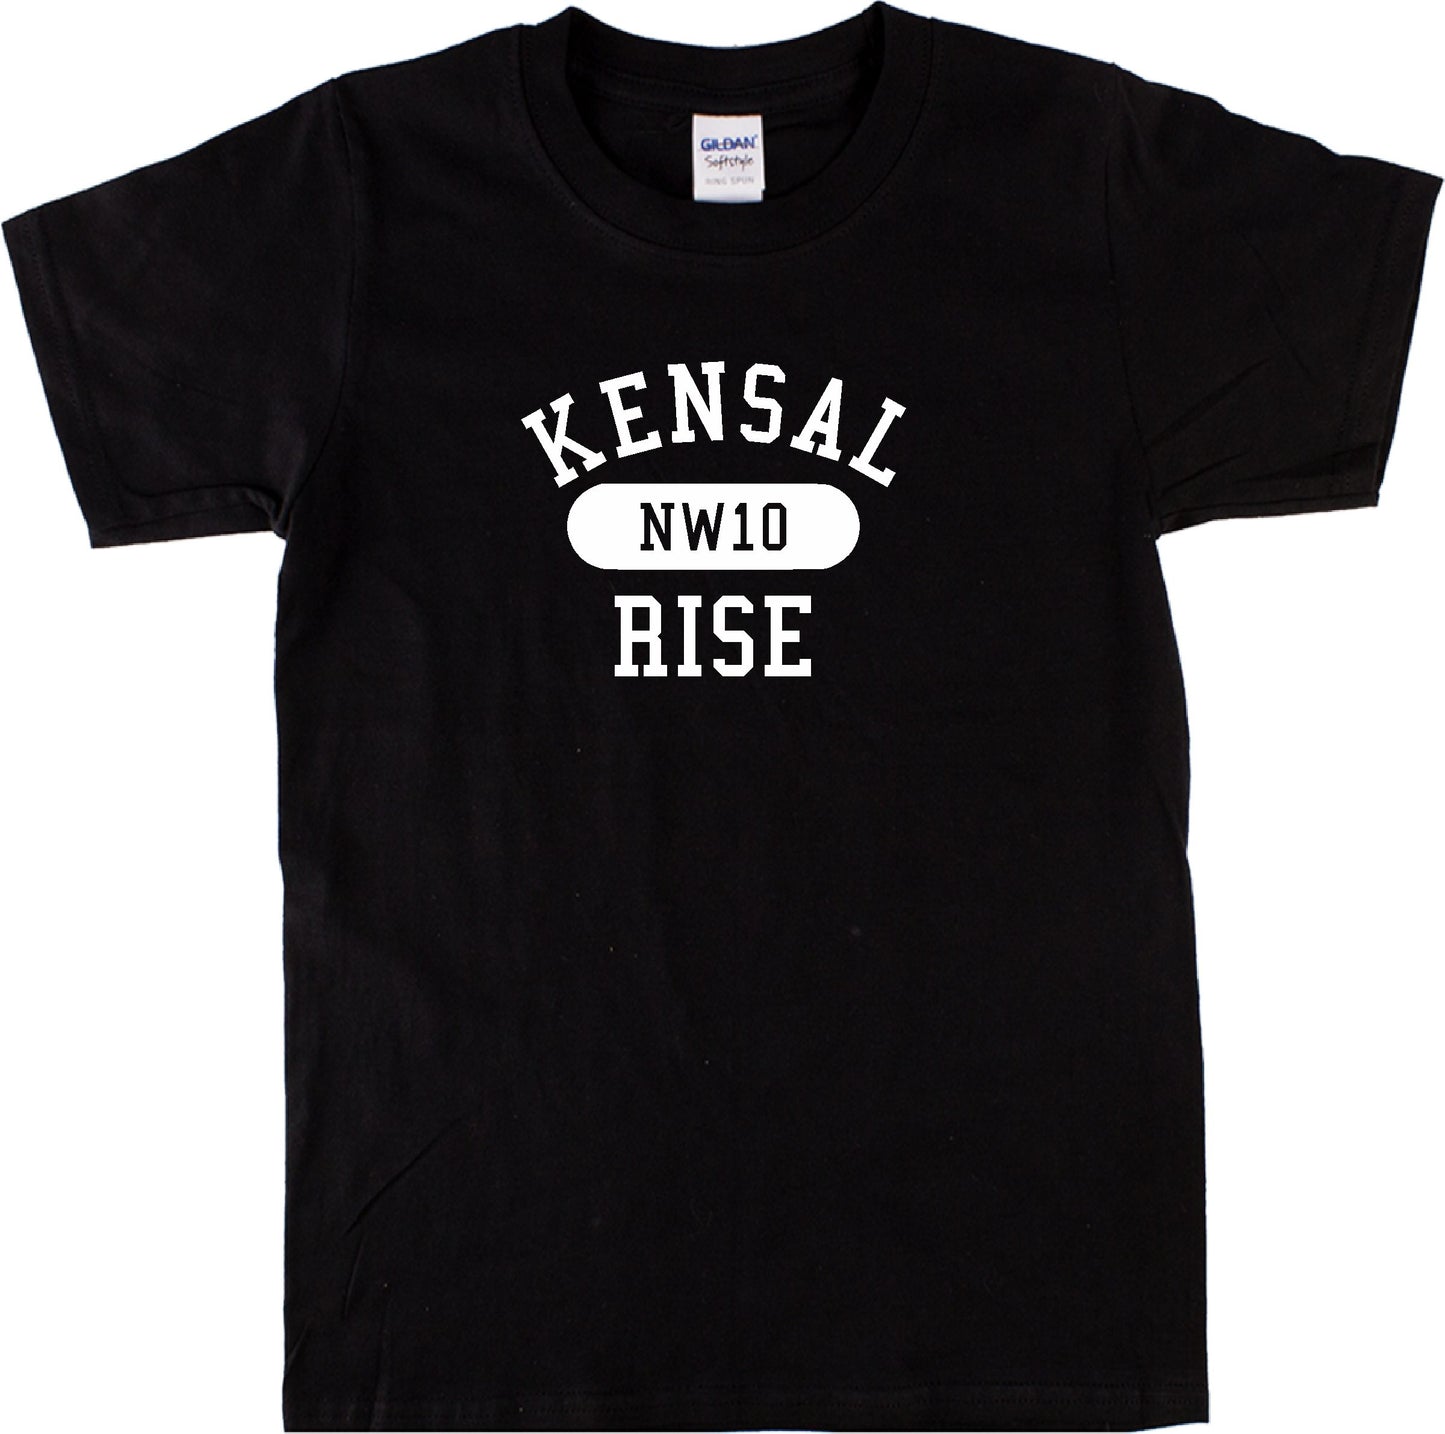 Kensal Rise T-Shirt - London Souvenir, Custom Version Available, Various Colours